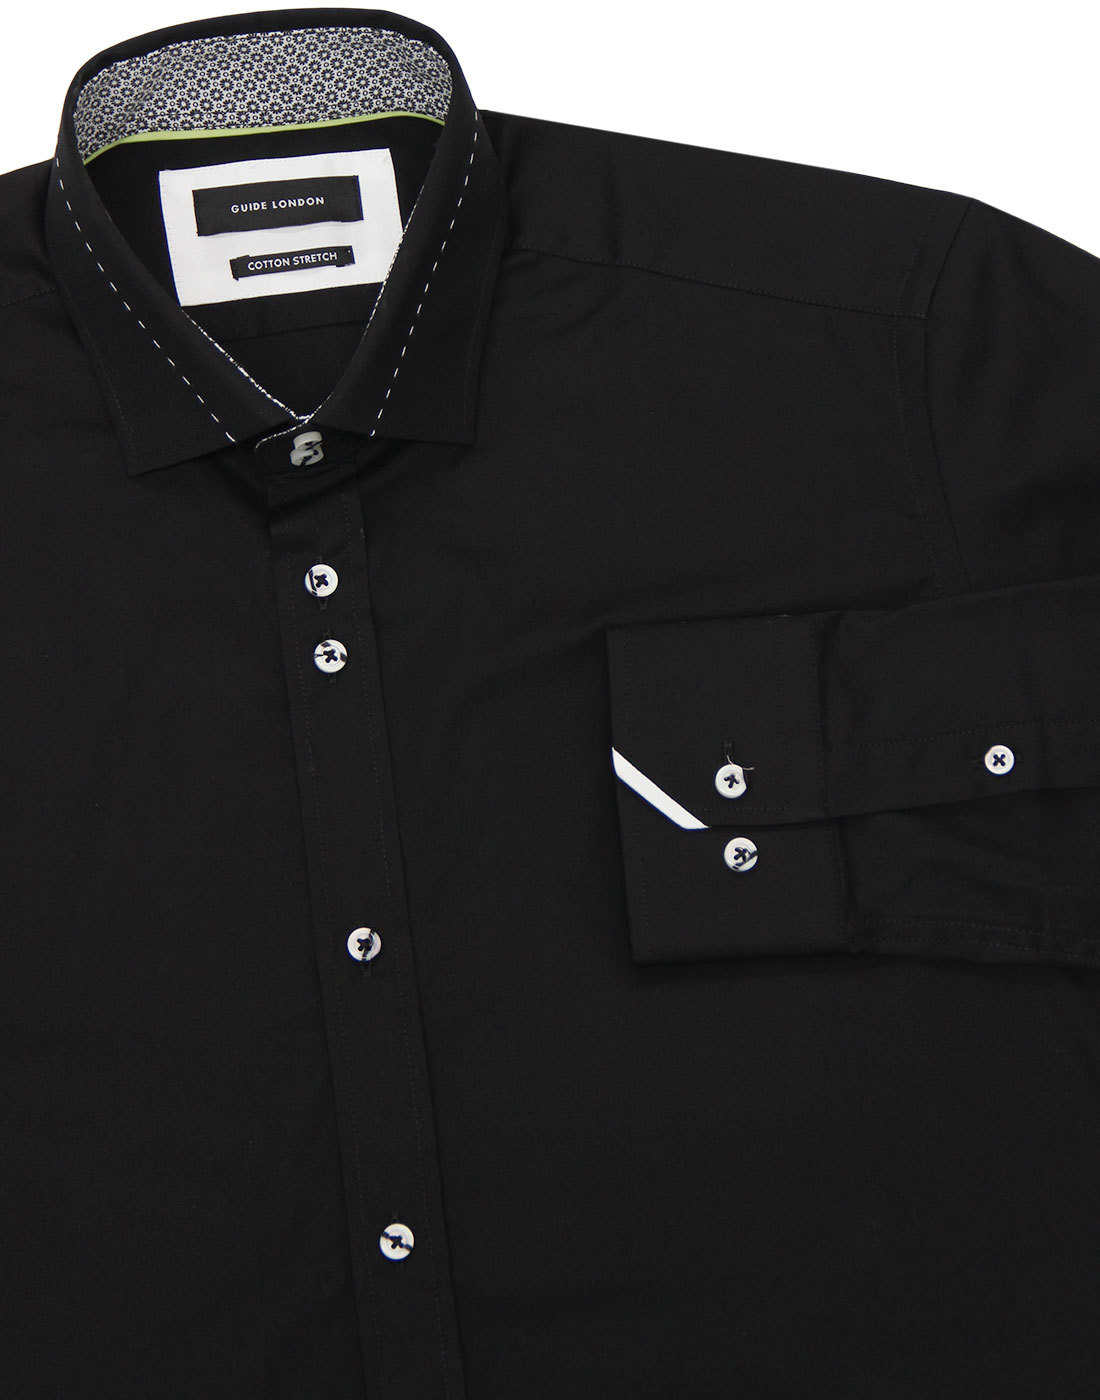 GUIDE LONDON Men's 1960s Mod Stitch Collar Smart Shirt in Black